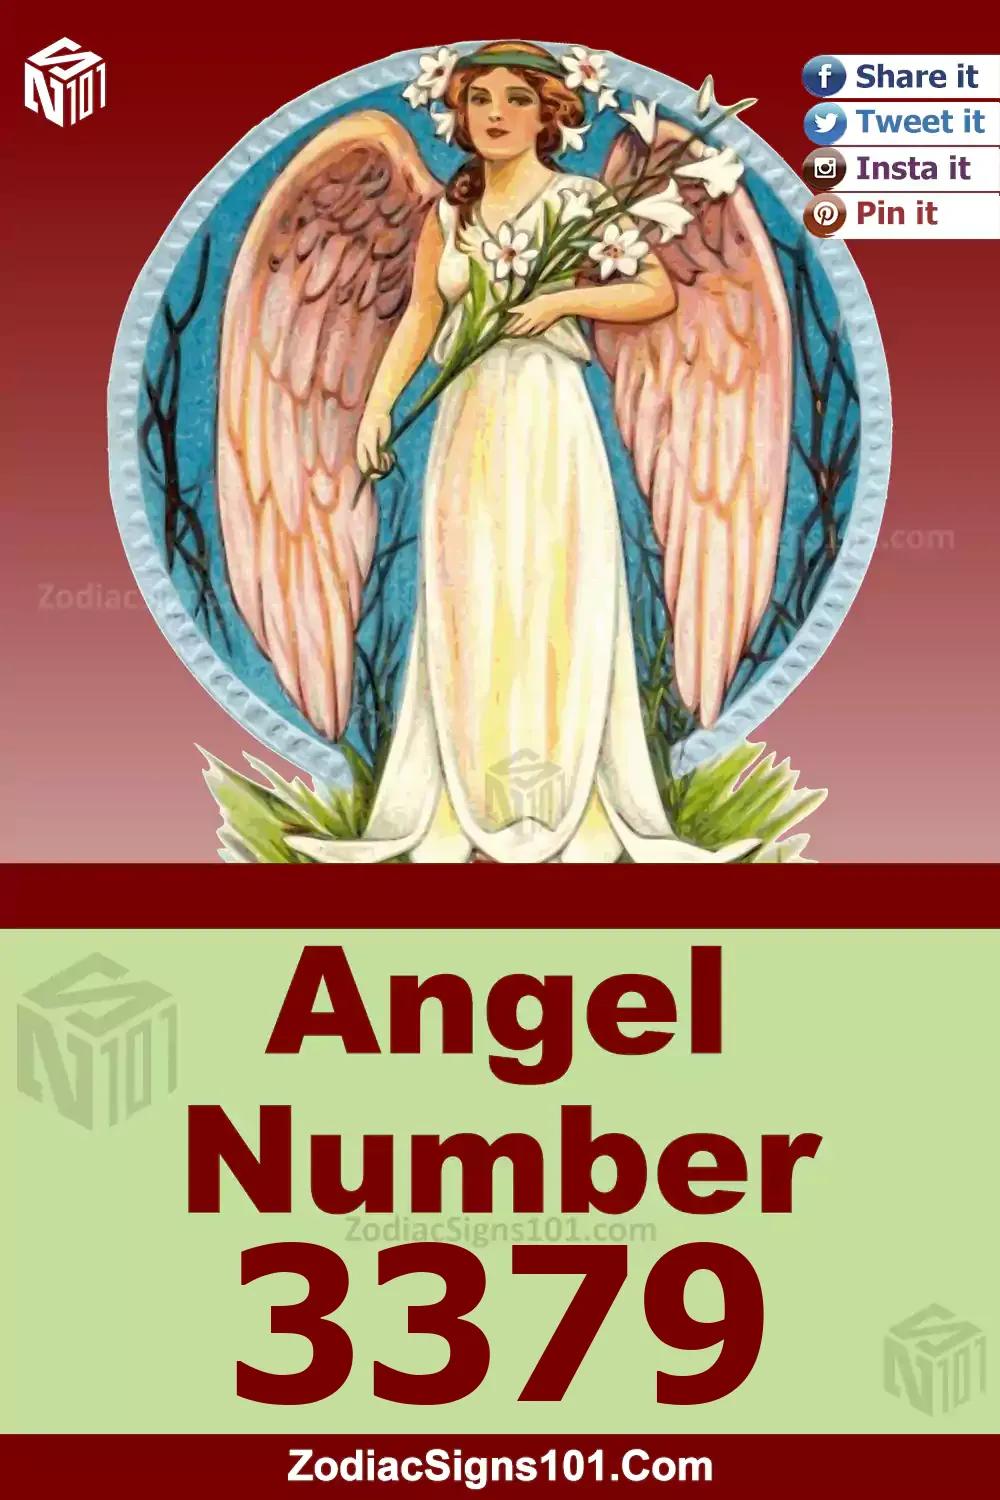 3379-Angel-Number-Meaning.jpg